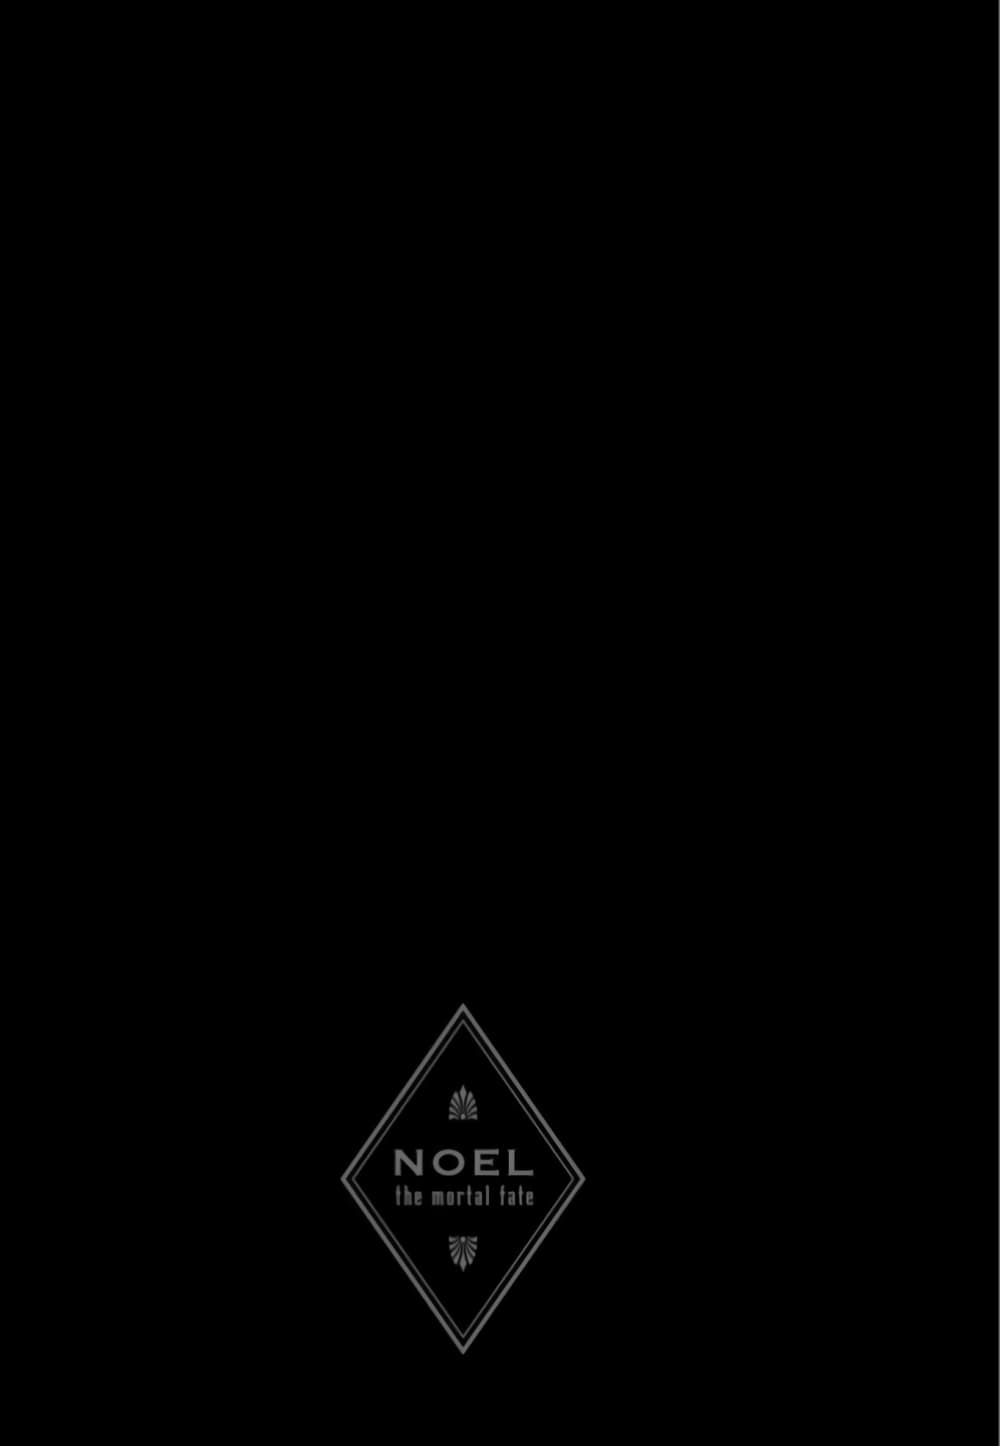 Noel the Mortal Fate 3 25